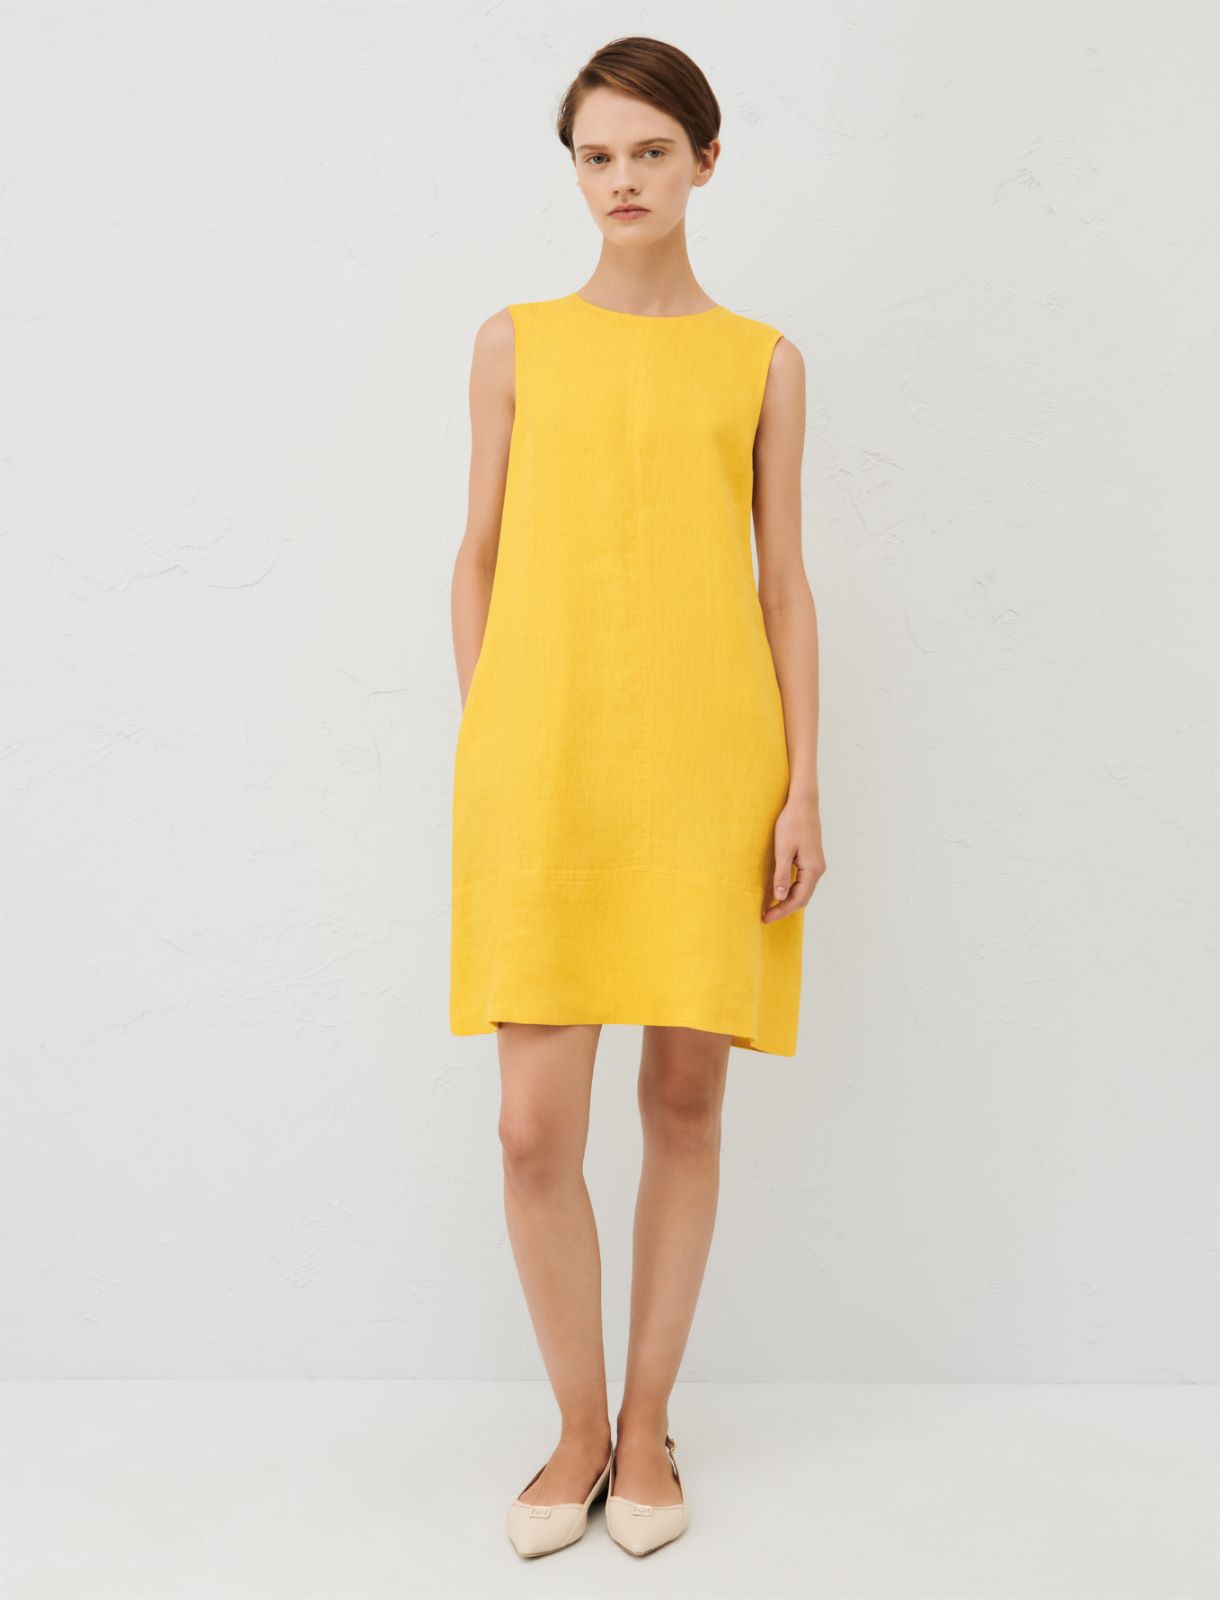 Linen Dress Irma - Yellow/Mustard